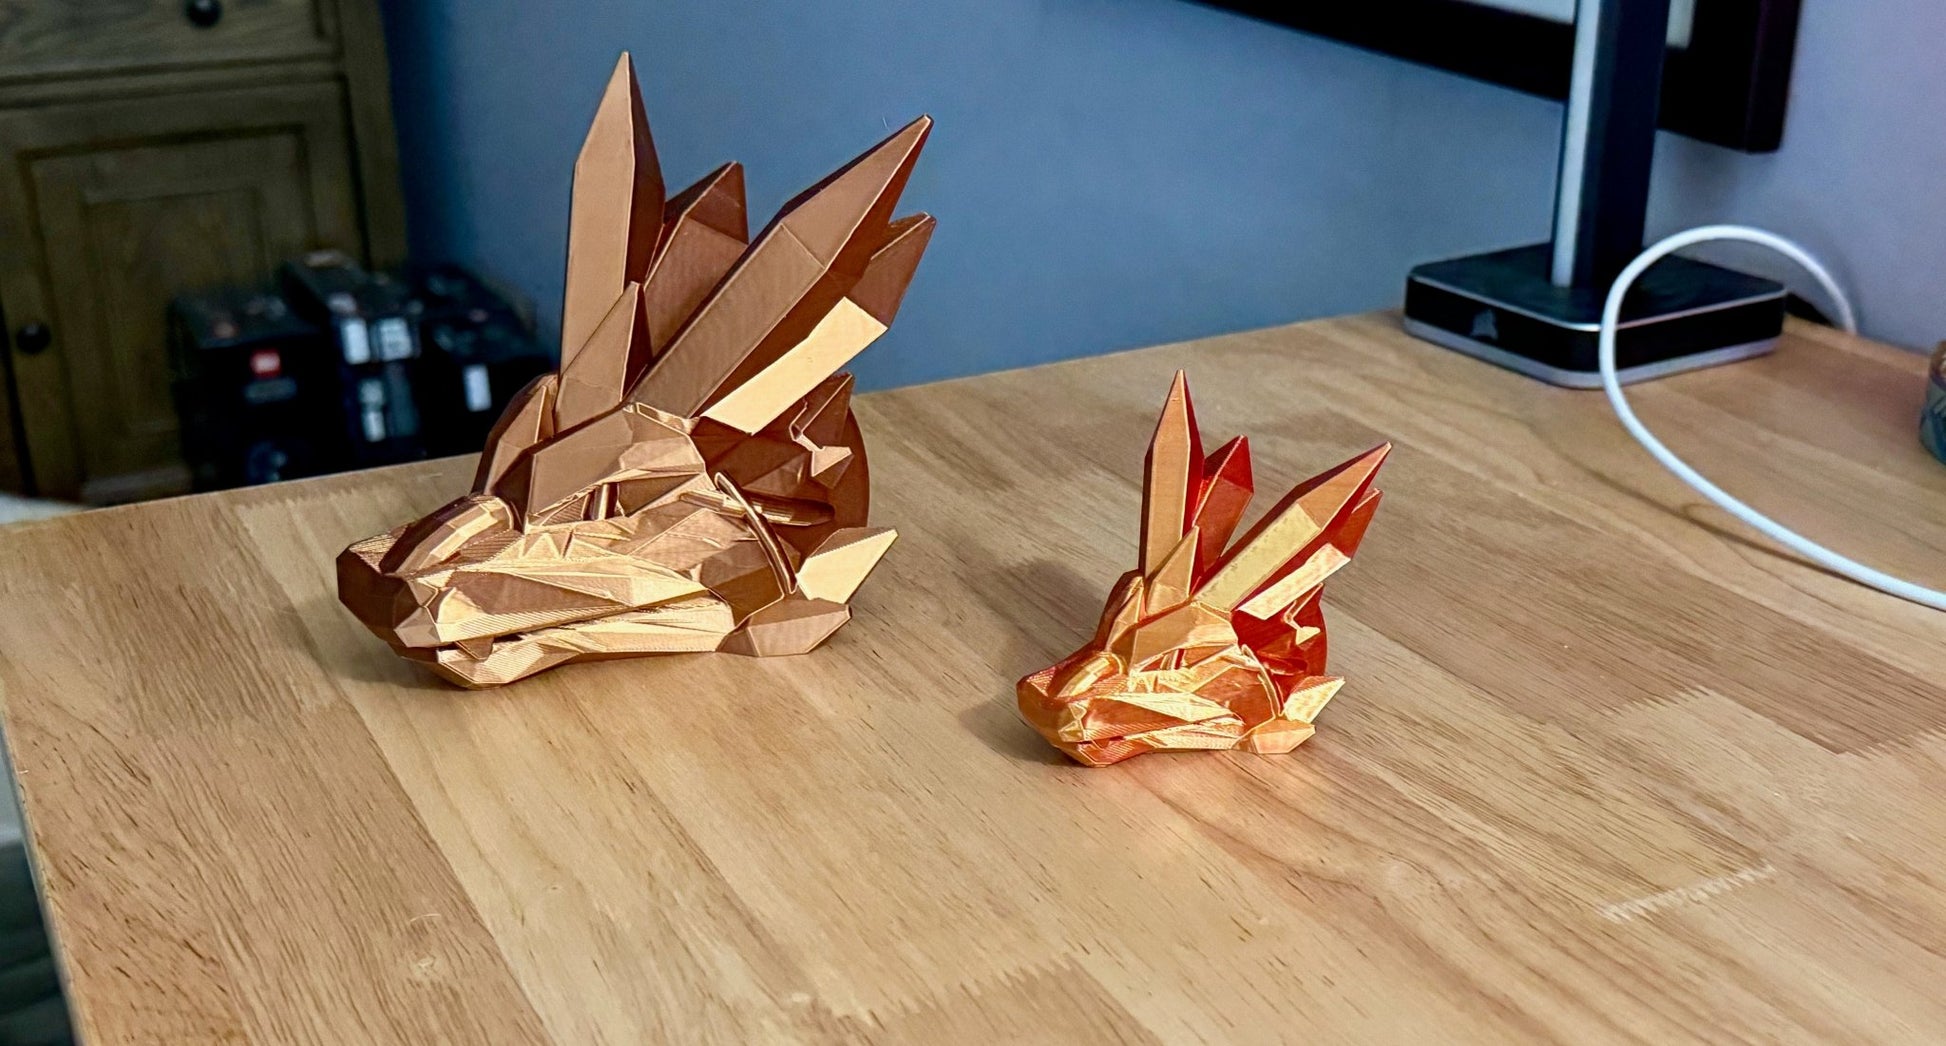 Dragon Head Desk Toy & Figurine - Articulated Dragon Head Desk Toy & Figurine - Acworth Alchemist